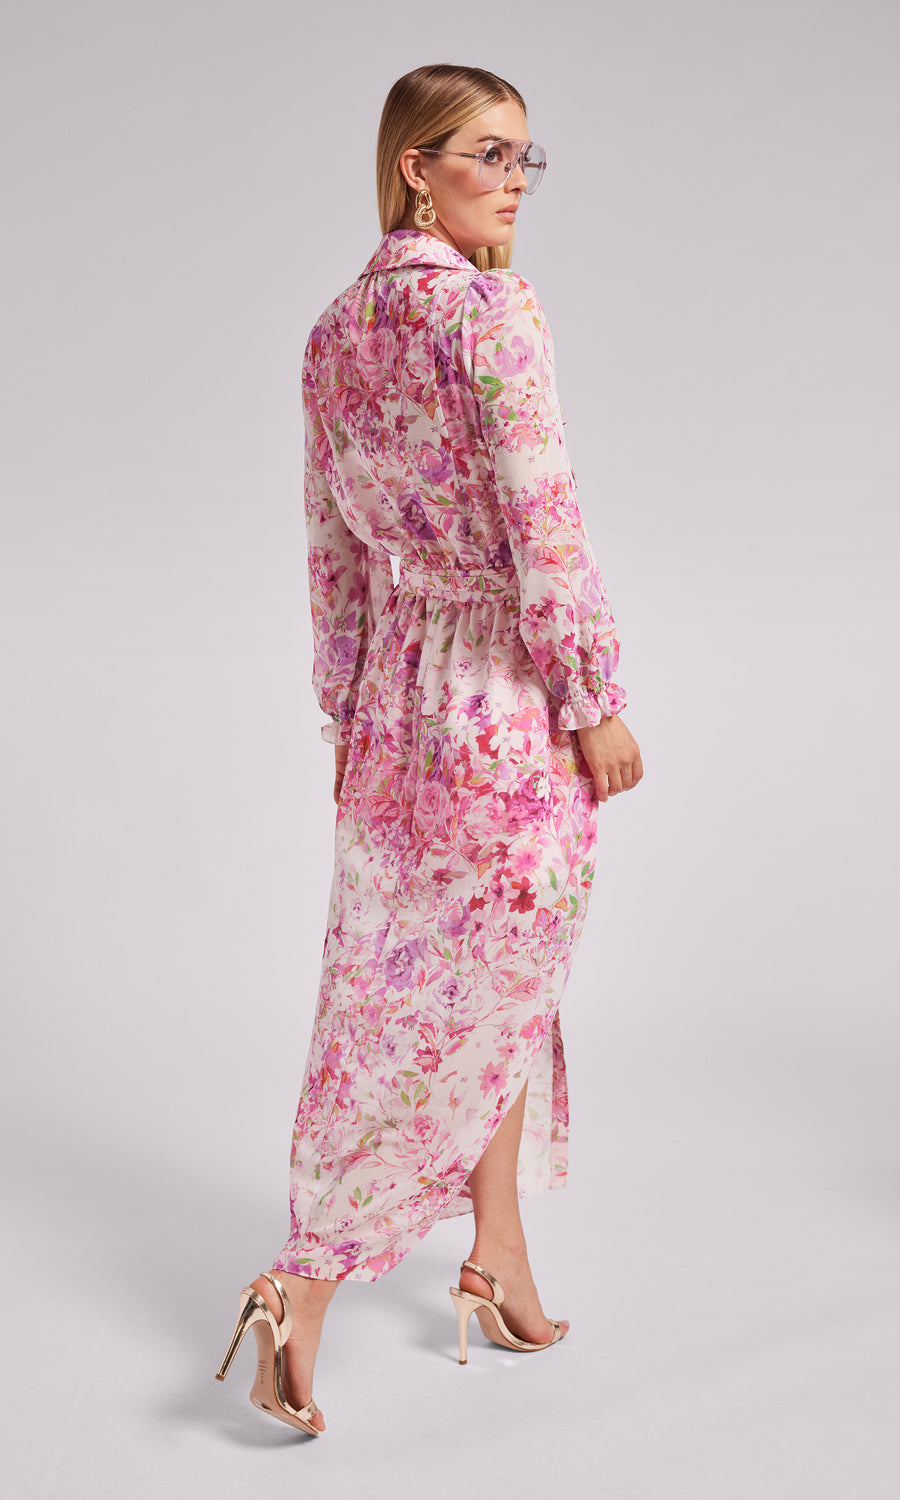 Silvia Floral Dress - Floral Pink 